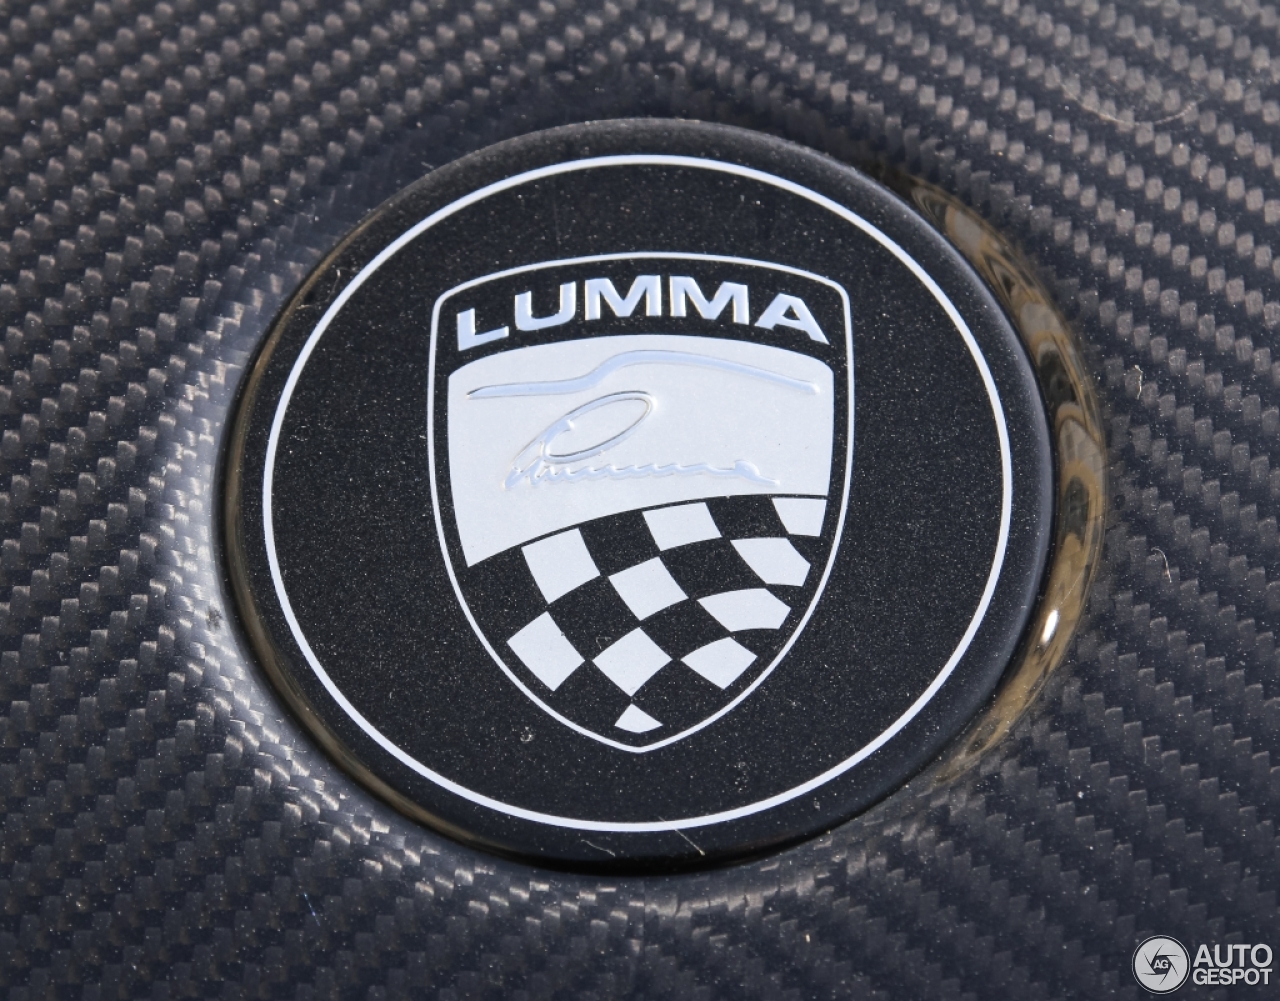 BMW Lumma CLR X 650 M